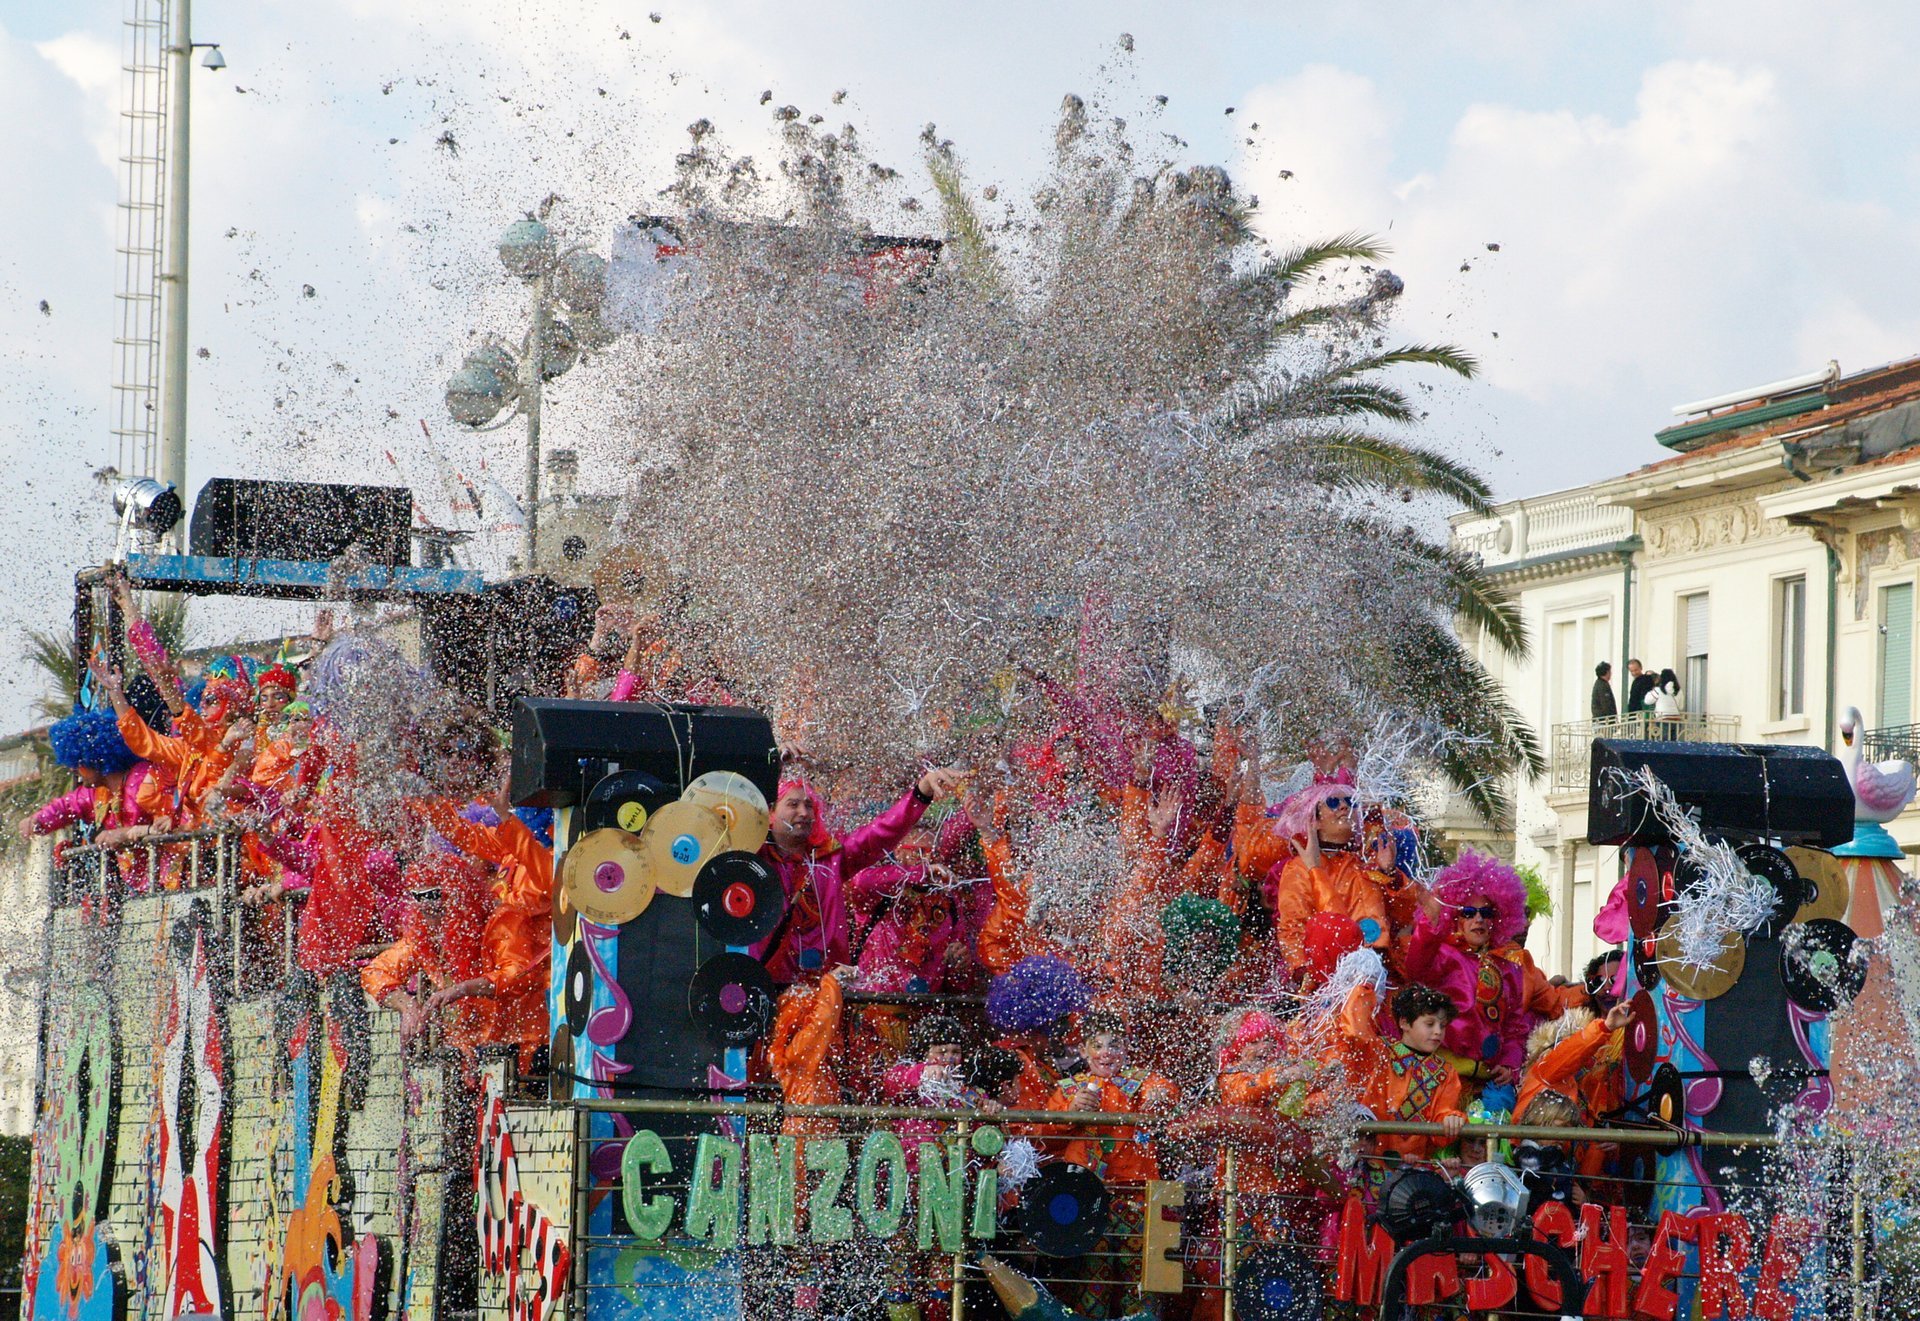 Carnaval de Viareggio (Carnevale di Viareggio)